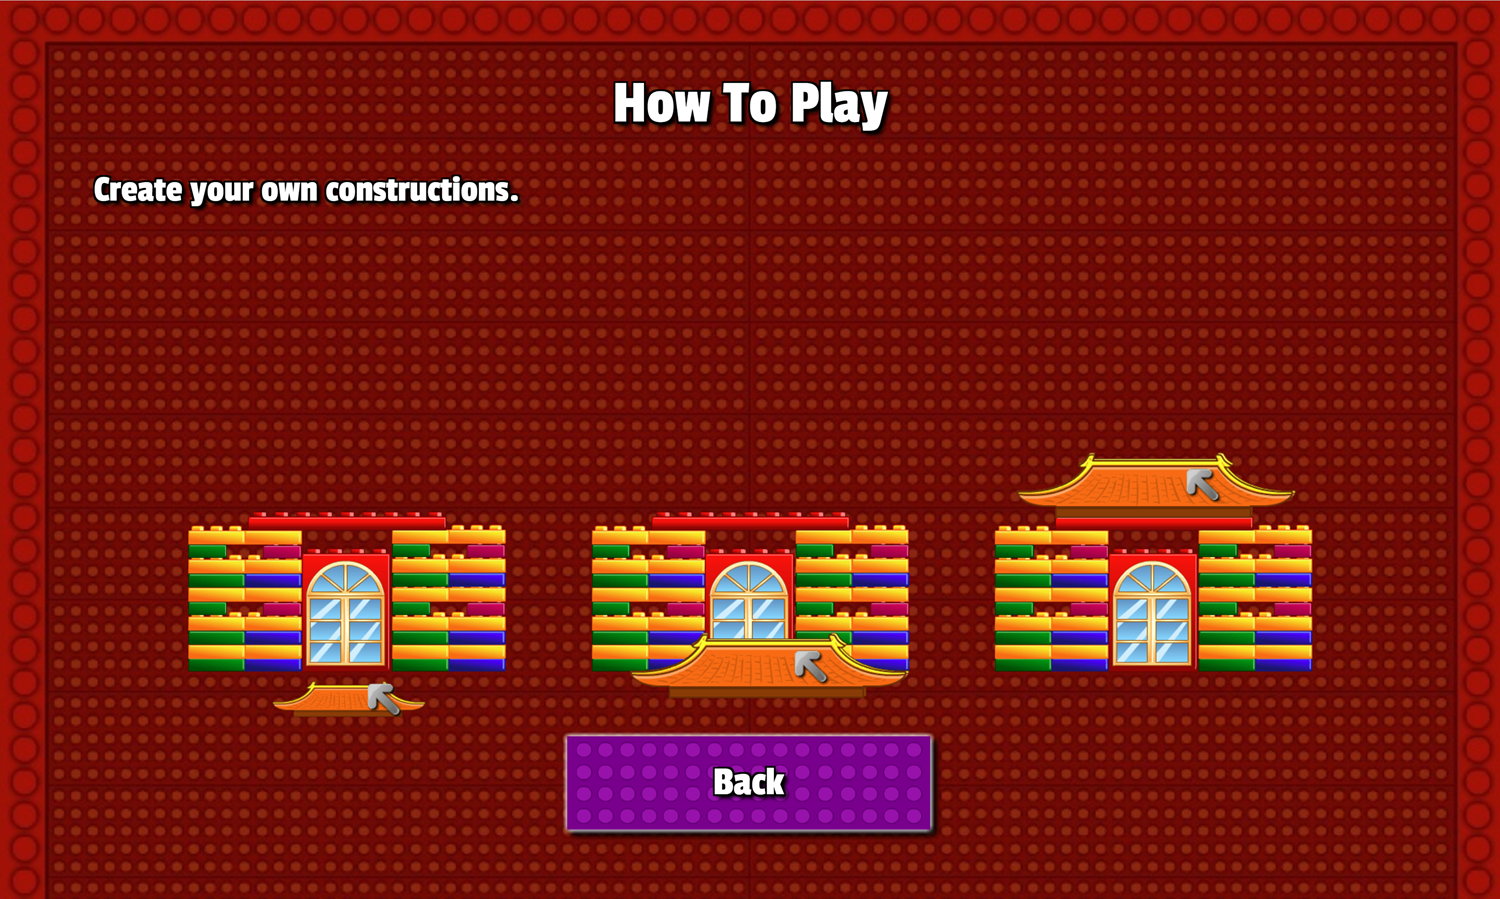 Brick Building Game How to Play Screen Screenshot.